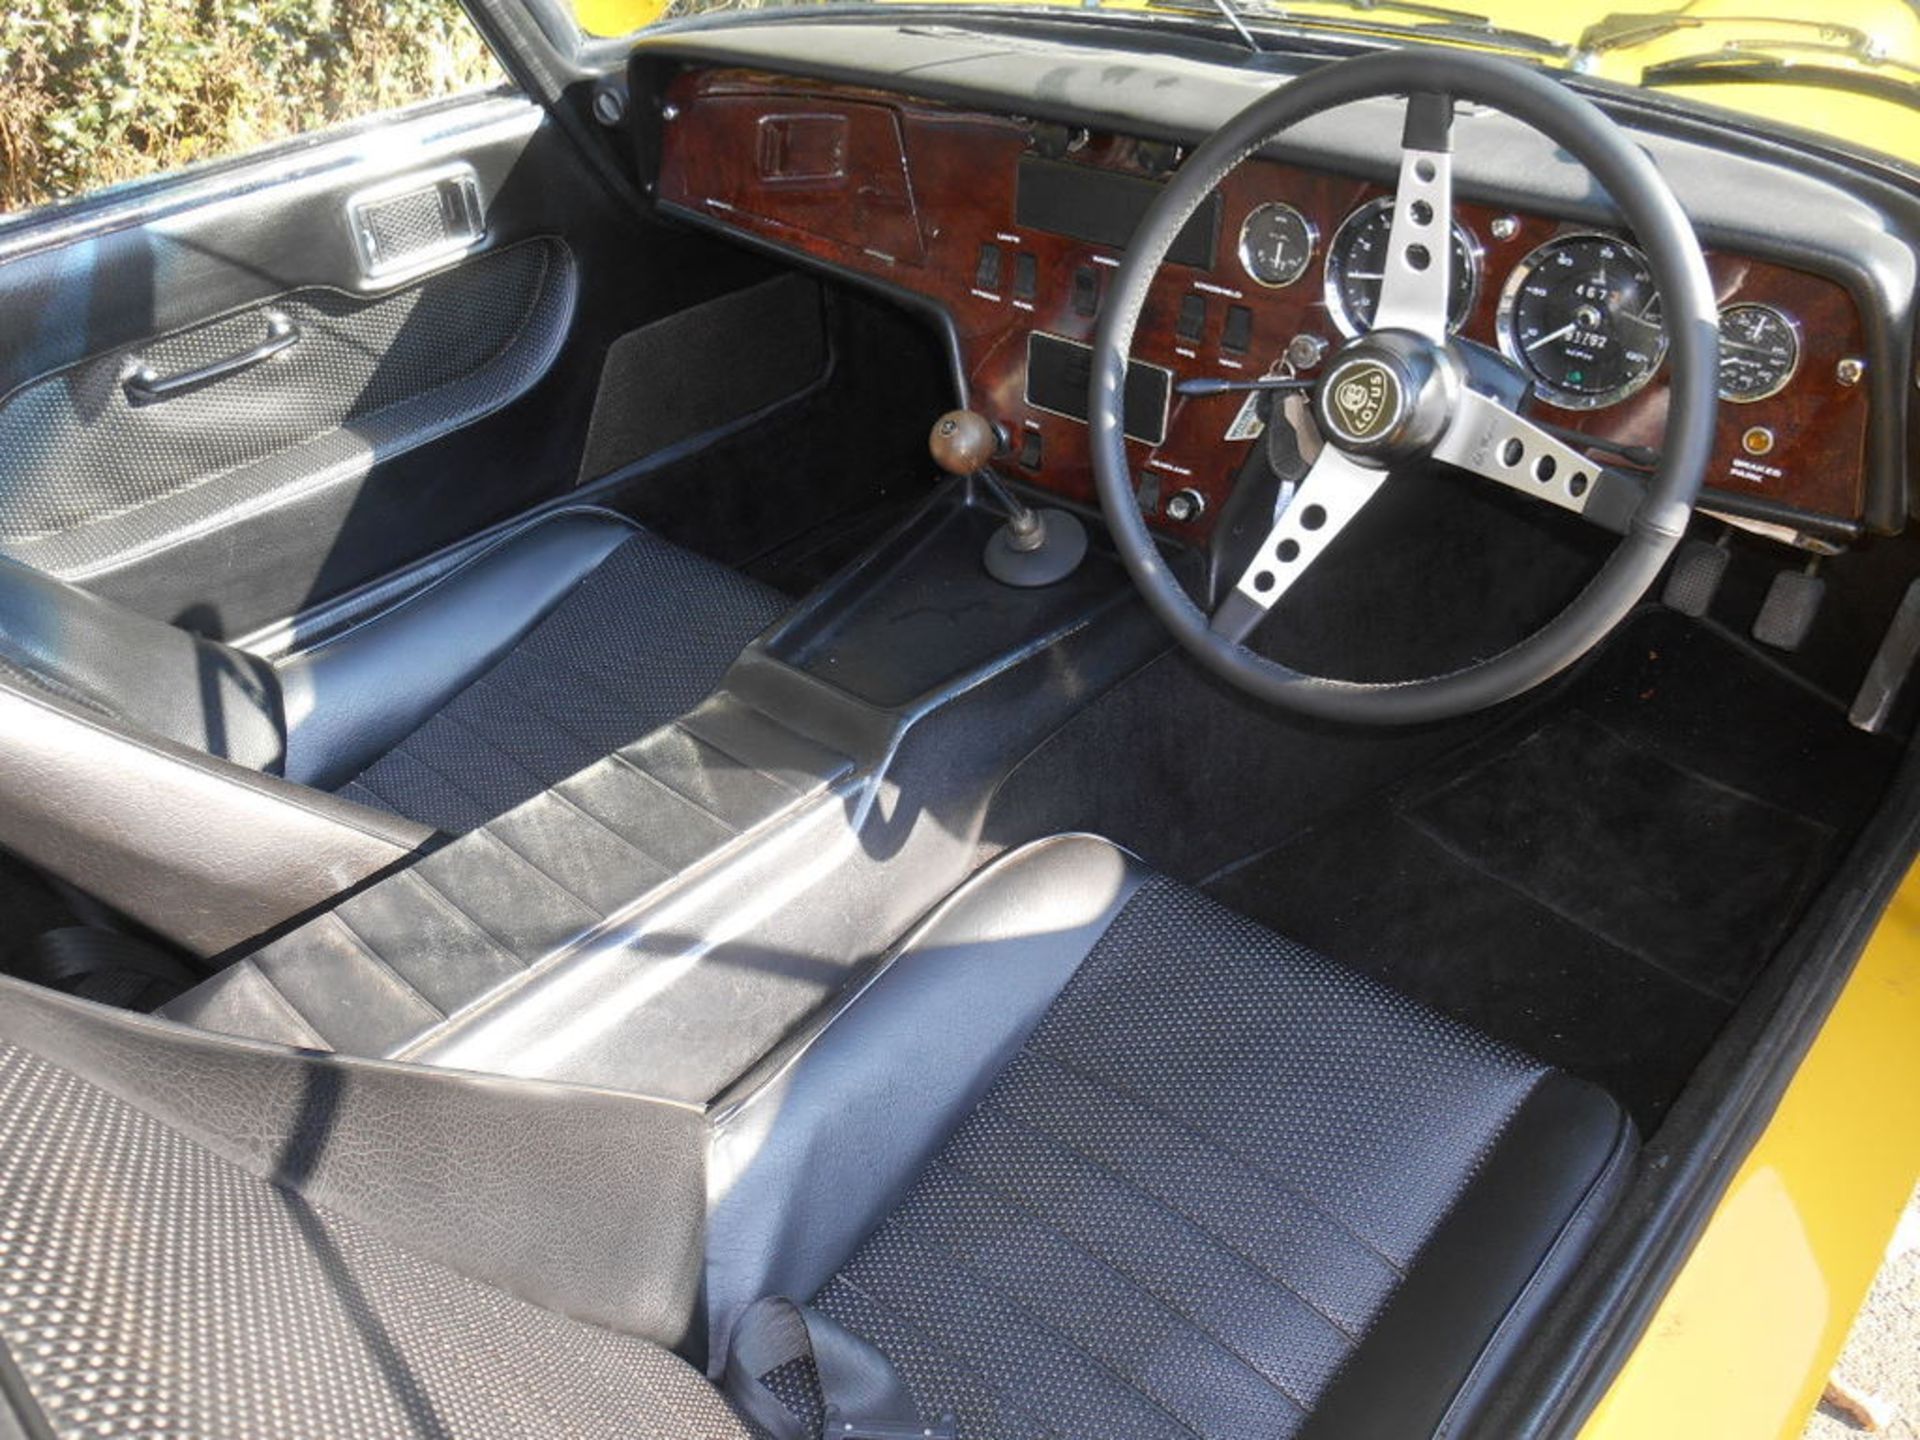 A 1971 Lotus Elan S4 drop head coupé, registration number JWY 611J, chassis number 7004080029C, - Image 2 of 3